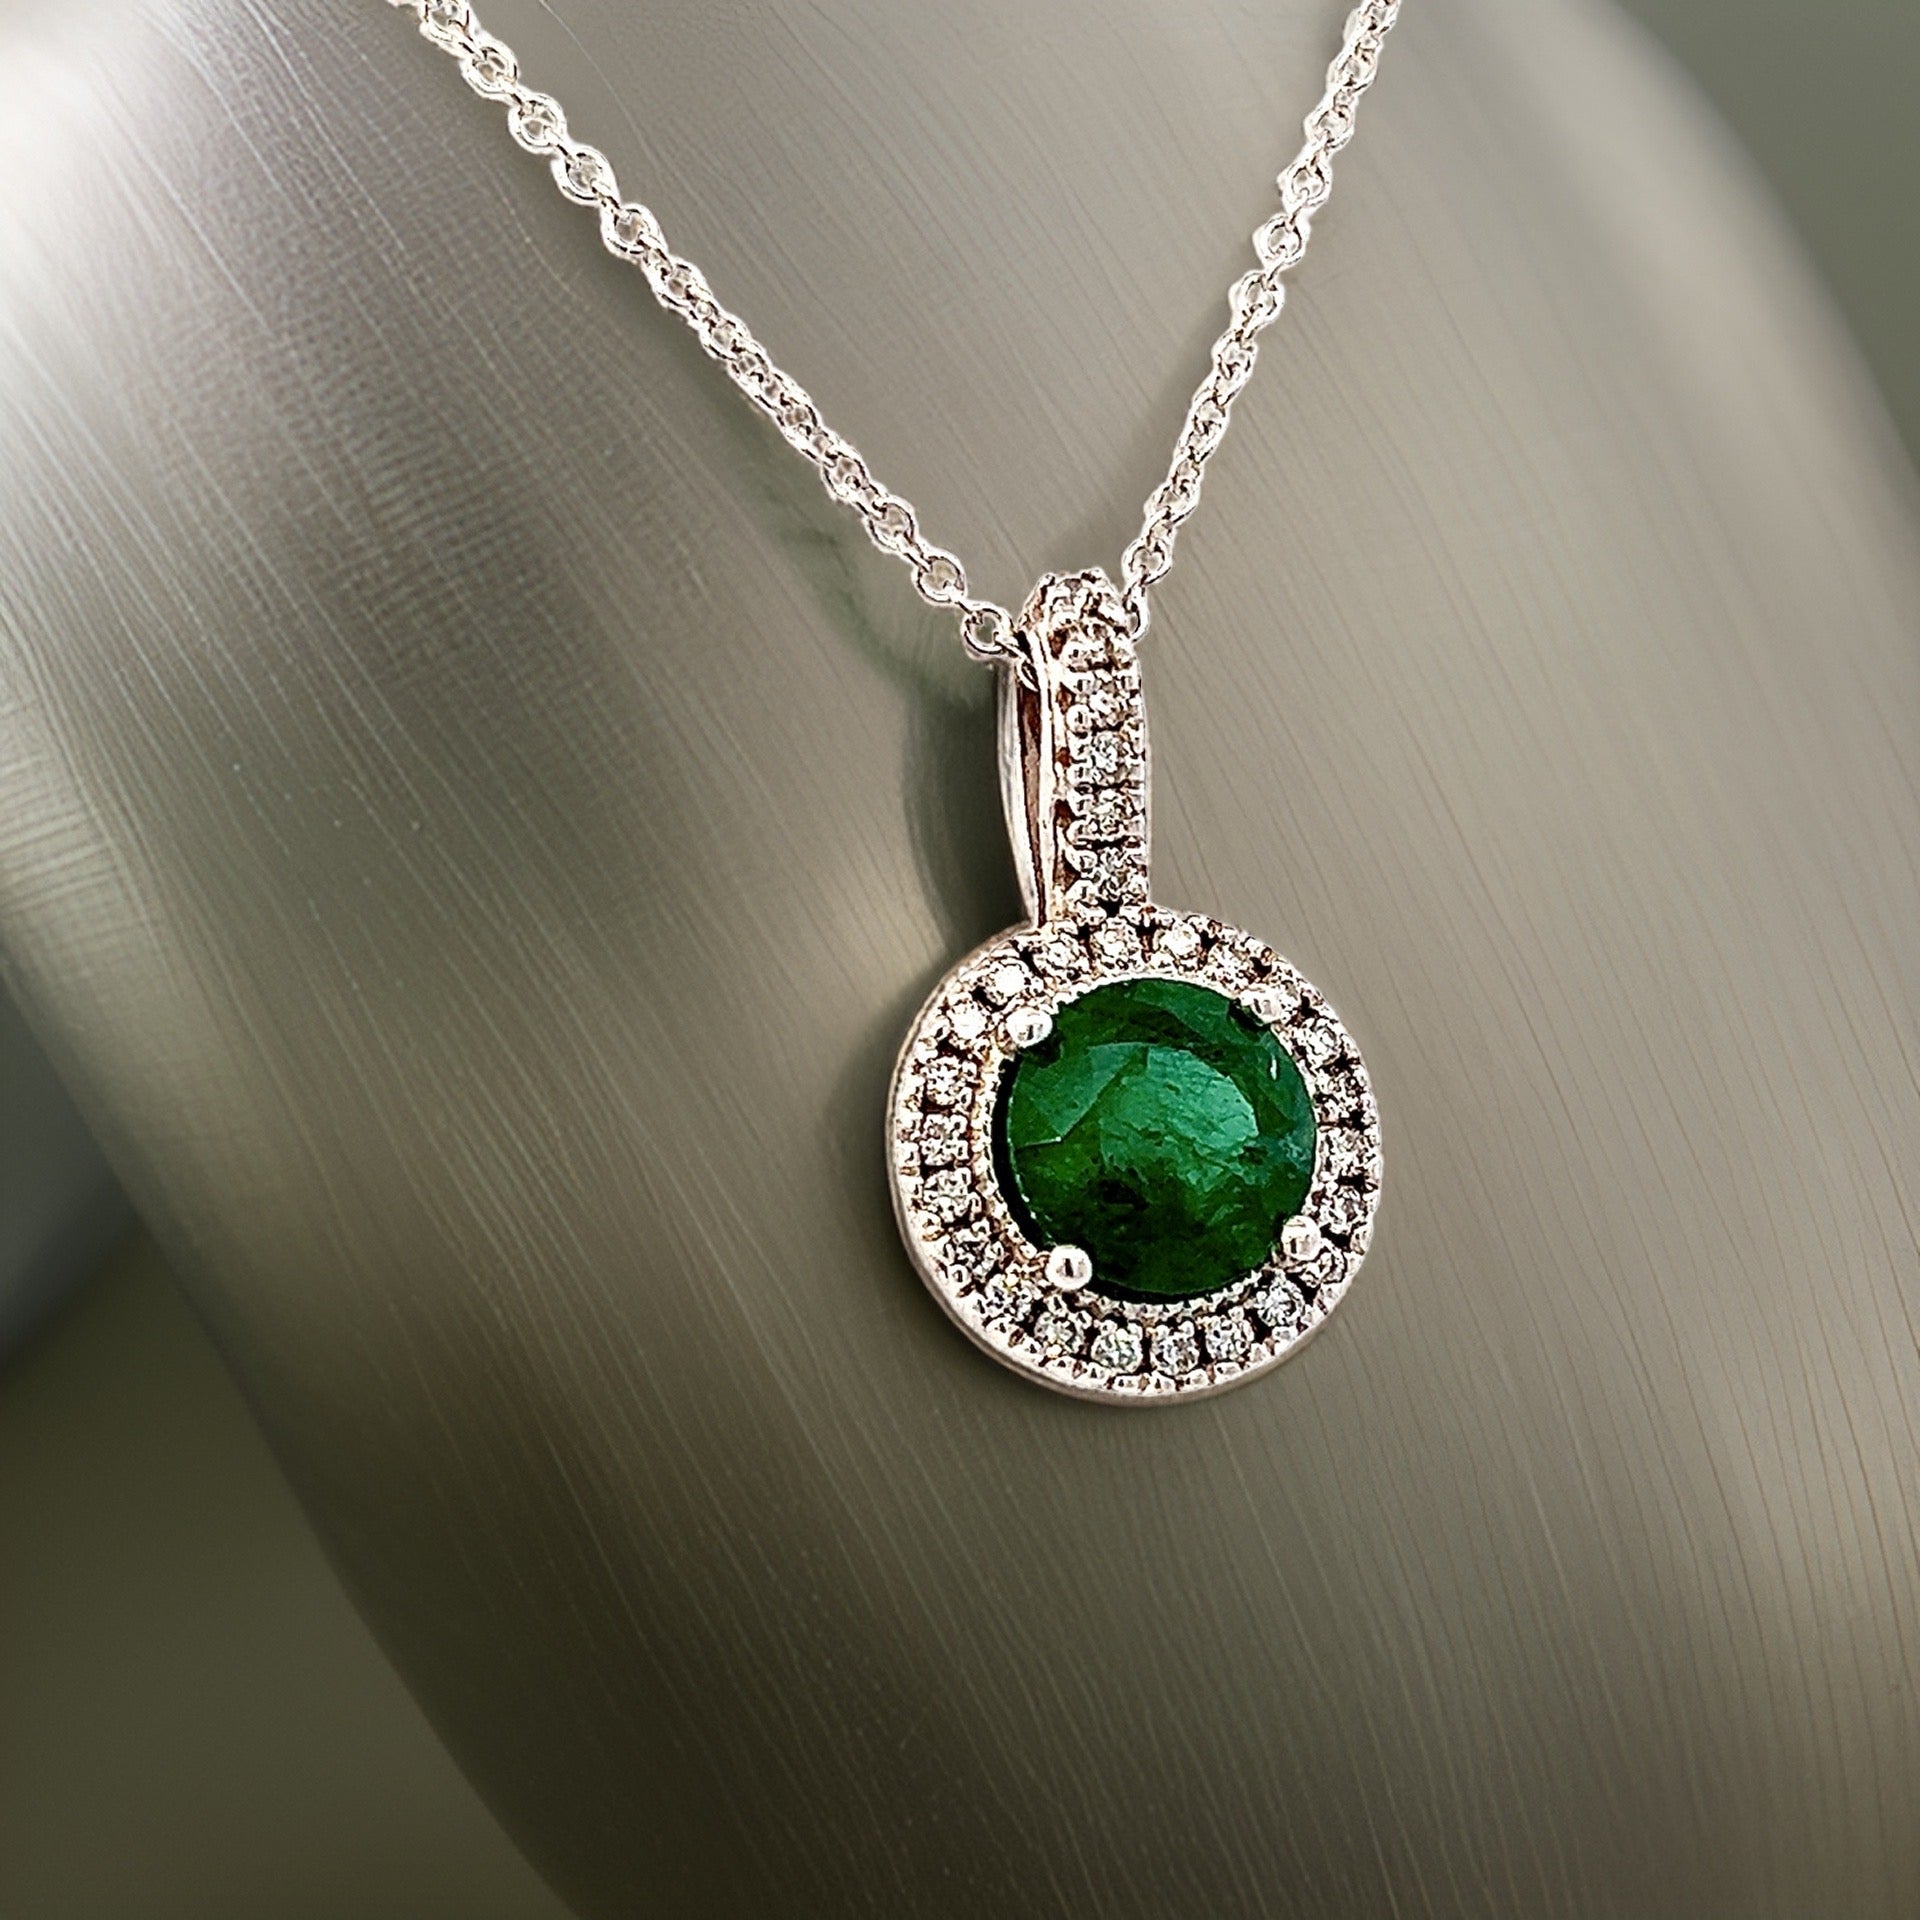 Natural Emerald Diamond Pendant Necklace 18" 14k W Gold 1.90 TCW Certified $4,950 301448 - Certified Fine Jewelry